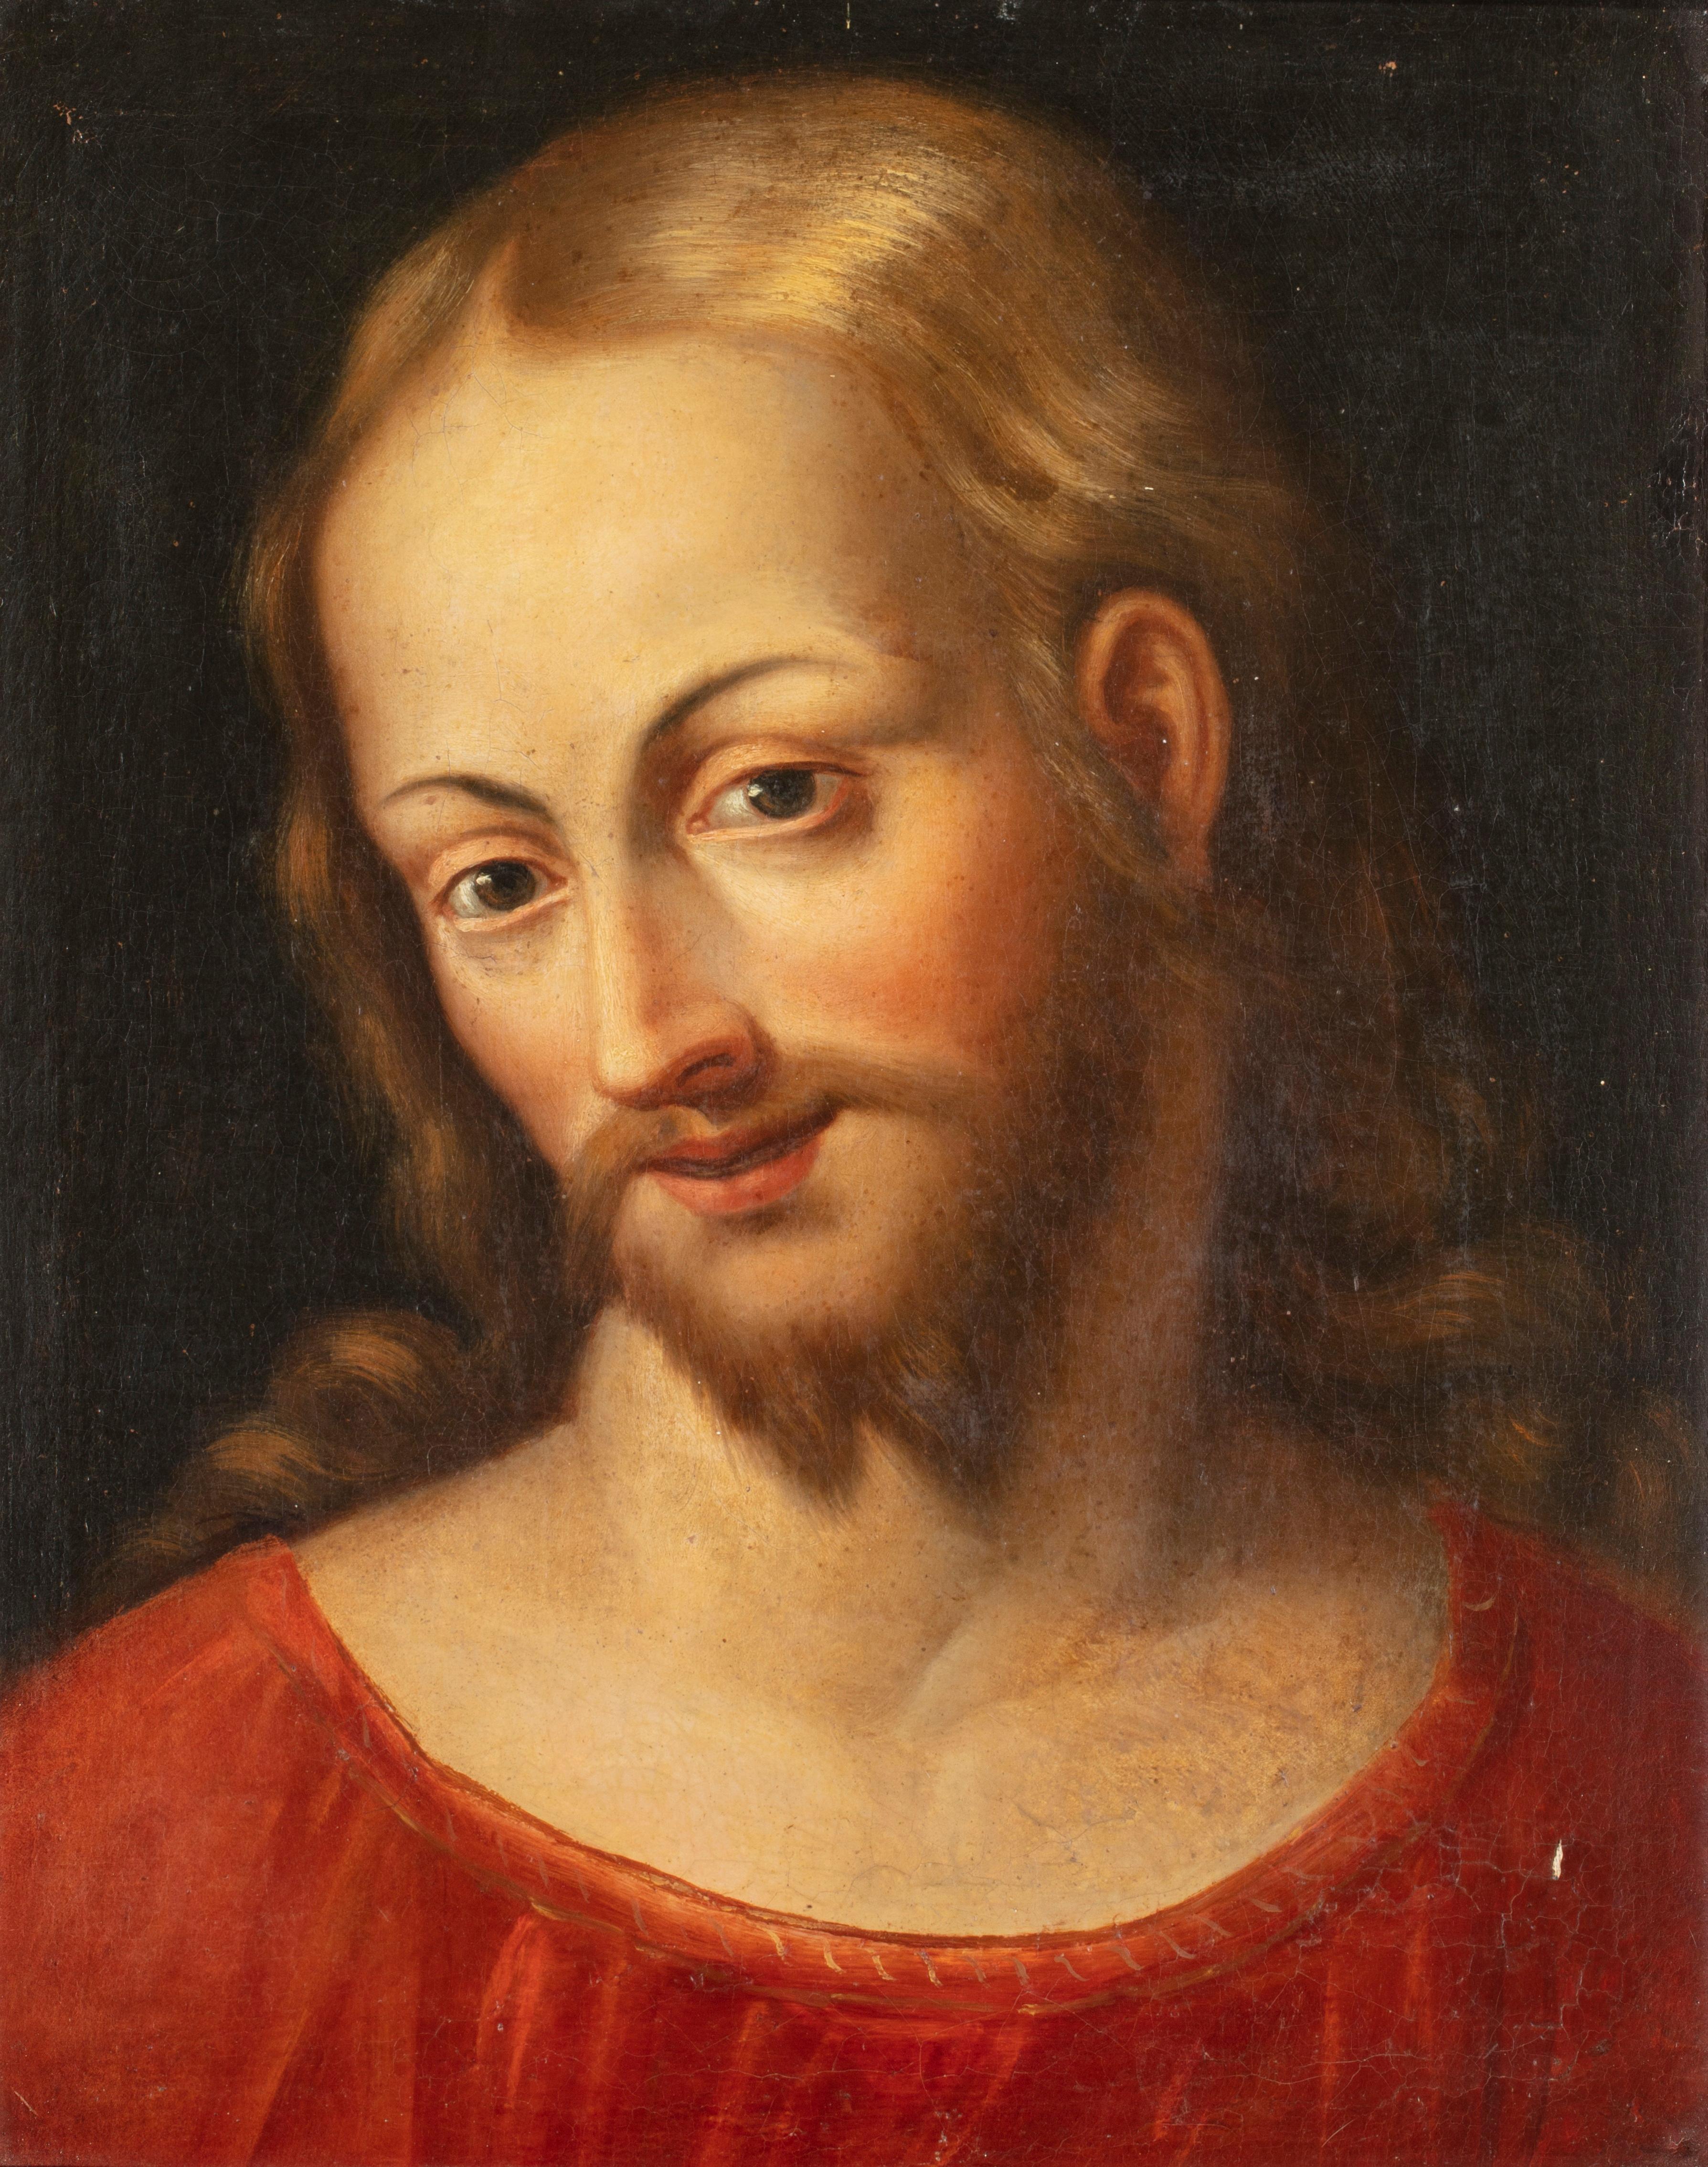 16th Century by Bernardino Detti Face of Christ Oil on Canvas - Painting by Bernardino Detti (Pistoia, 1498 – Pistoia, 1572)